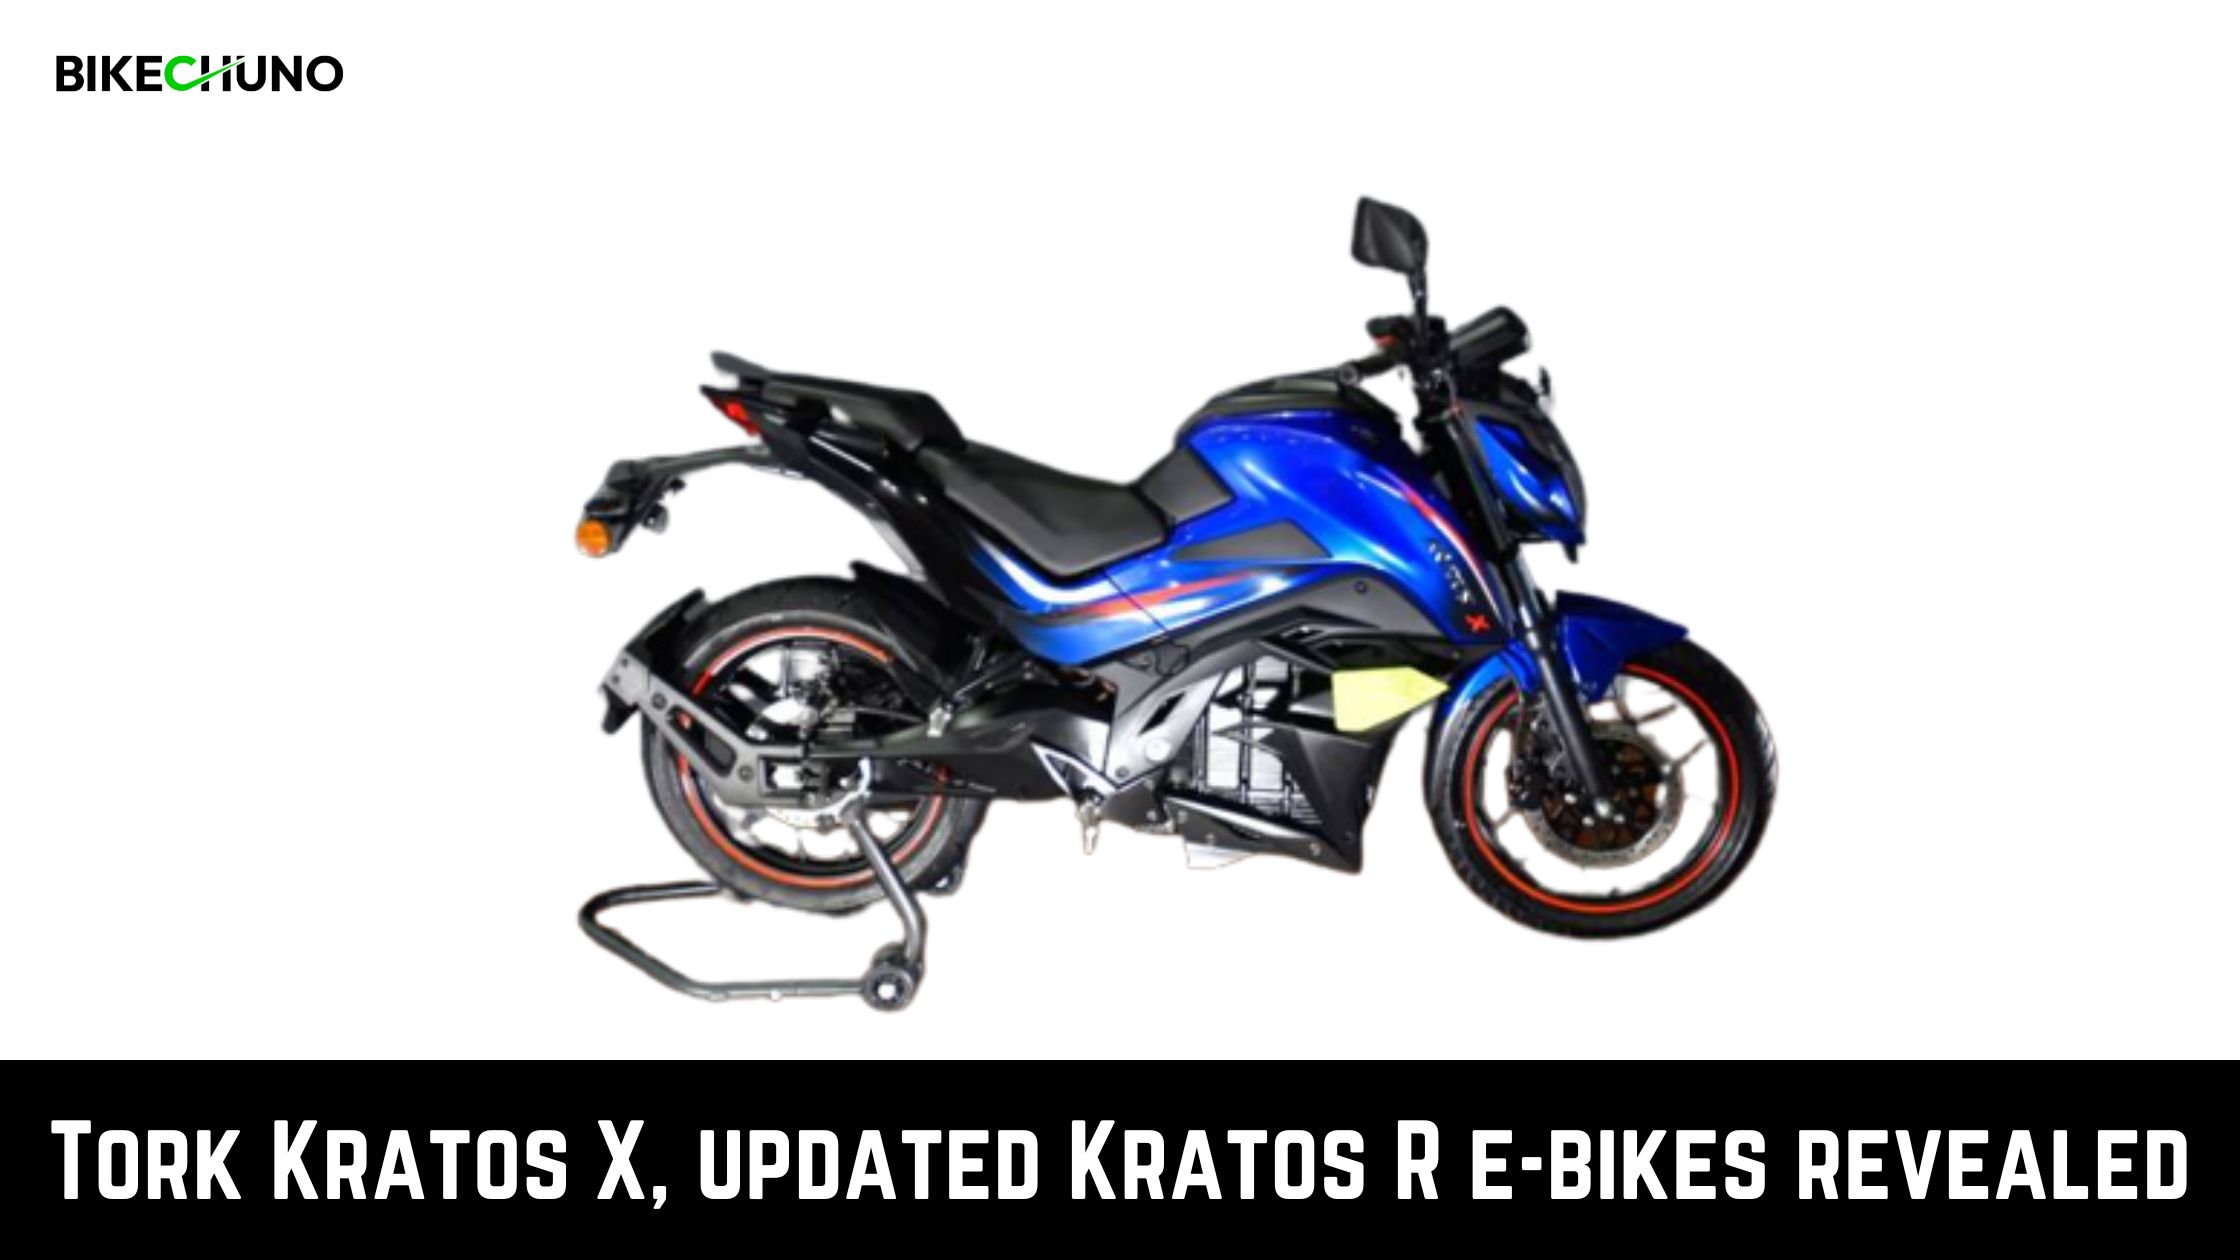 Tork Kratos X, updated Kratos R e-bikes revealed